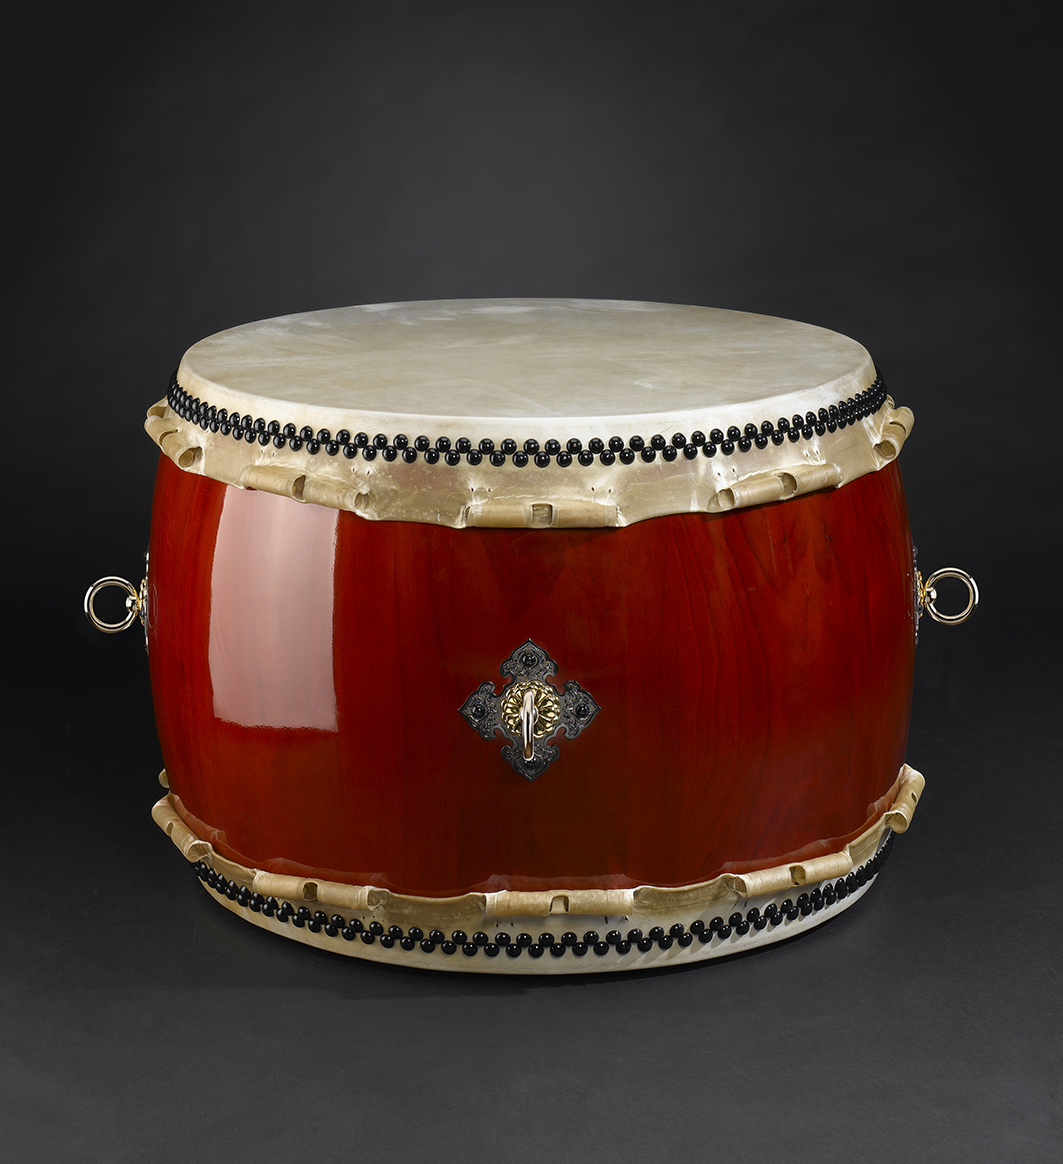 Hira-Daiko high quality drum Ø90cm / h: 65cm (3.600€)